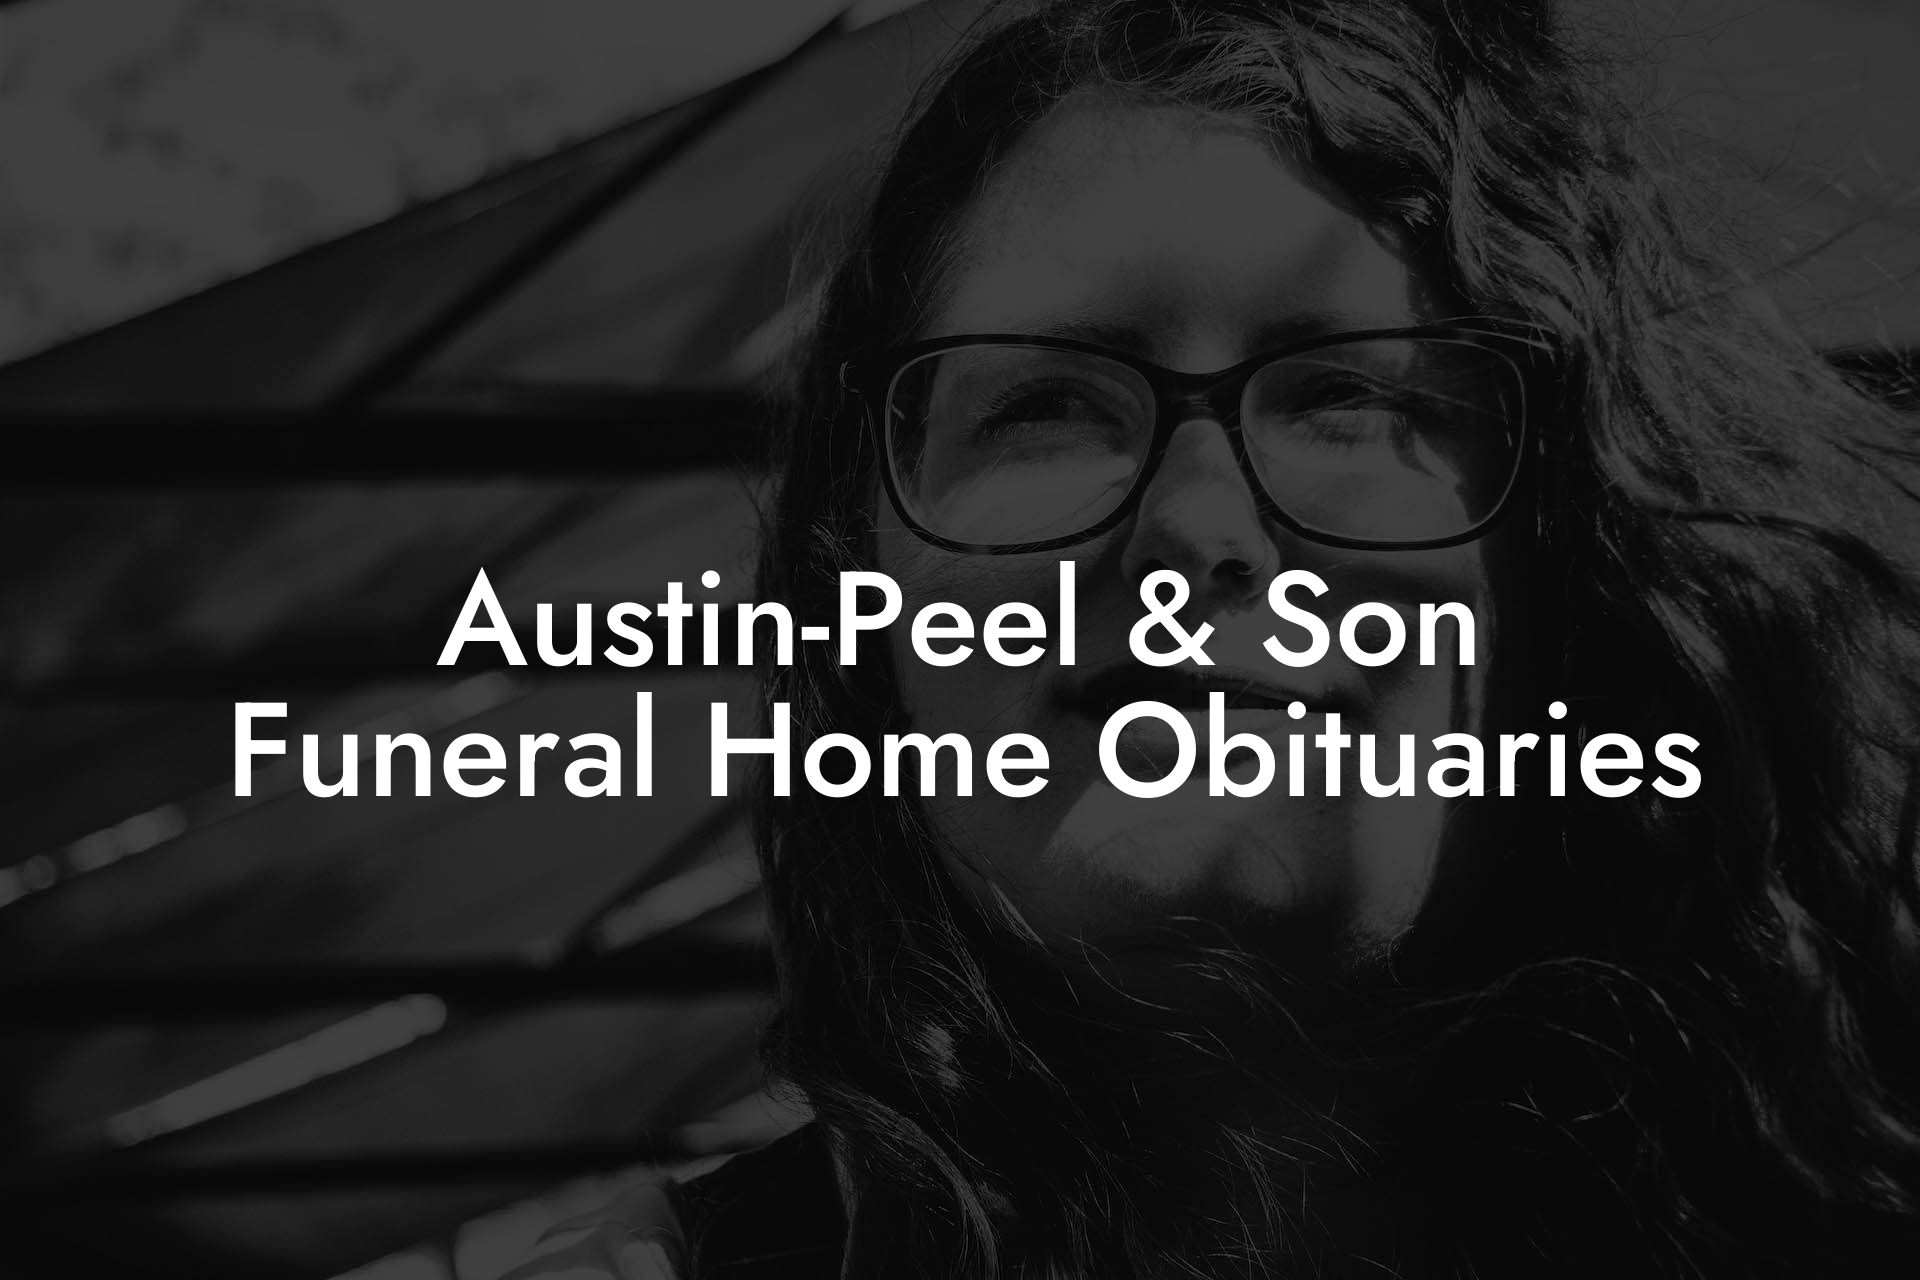 Austin-Peel & Son Funeral Home Obituaries